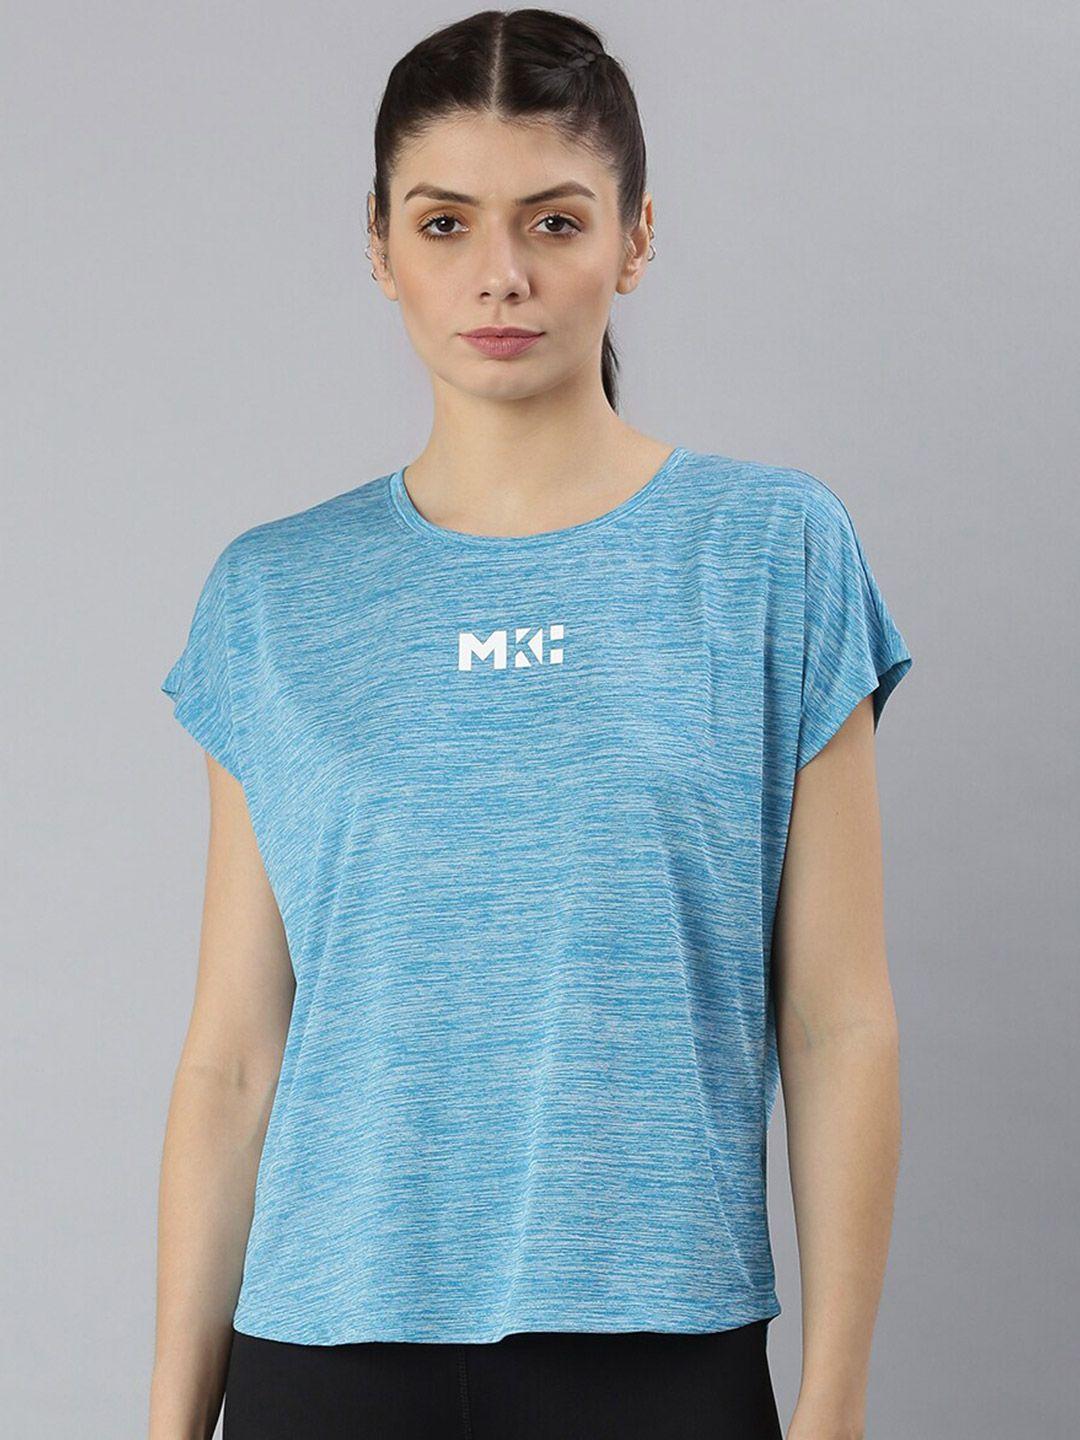 mkh women relaxed fit blue dri-fit sports t-shirt